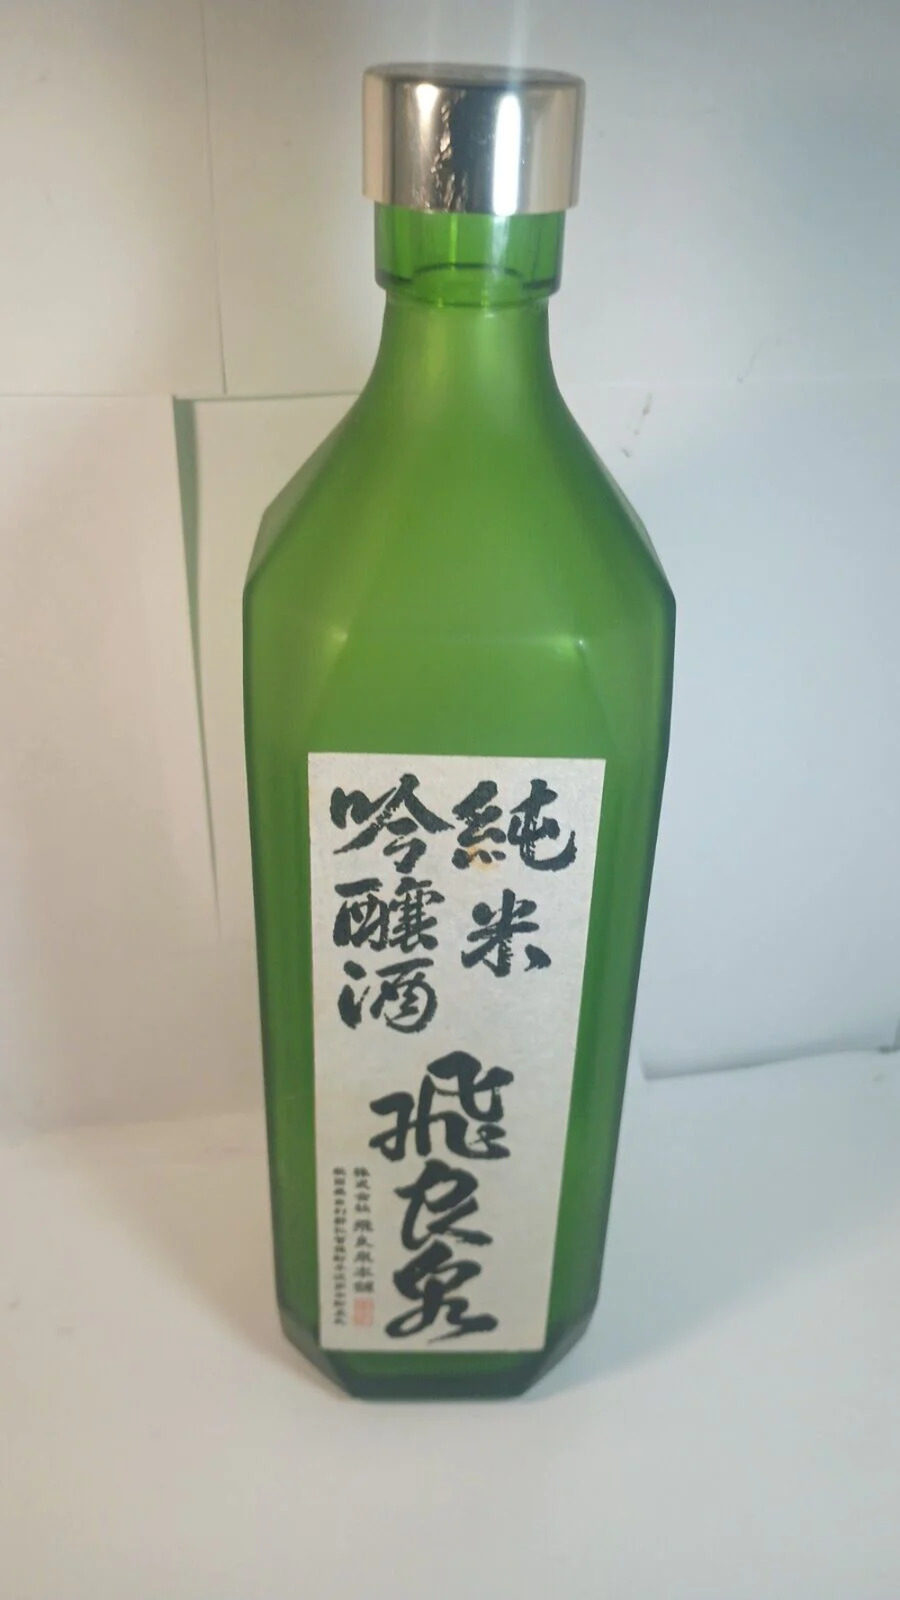 Kumesen Awamori Sake Green Empty Bottle Big Size 5400ml 50cm color green rare